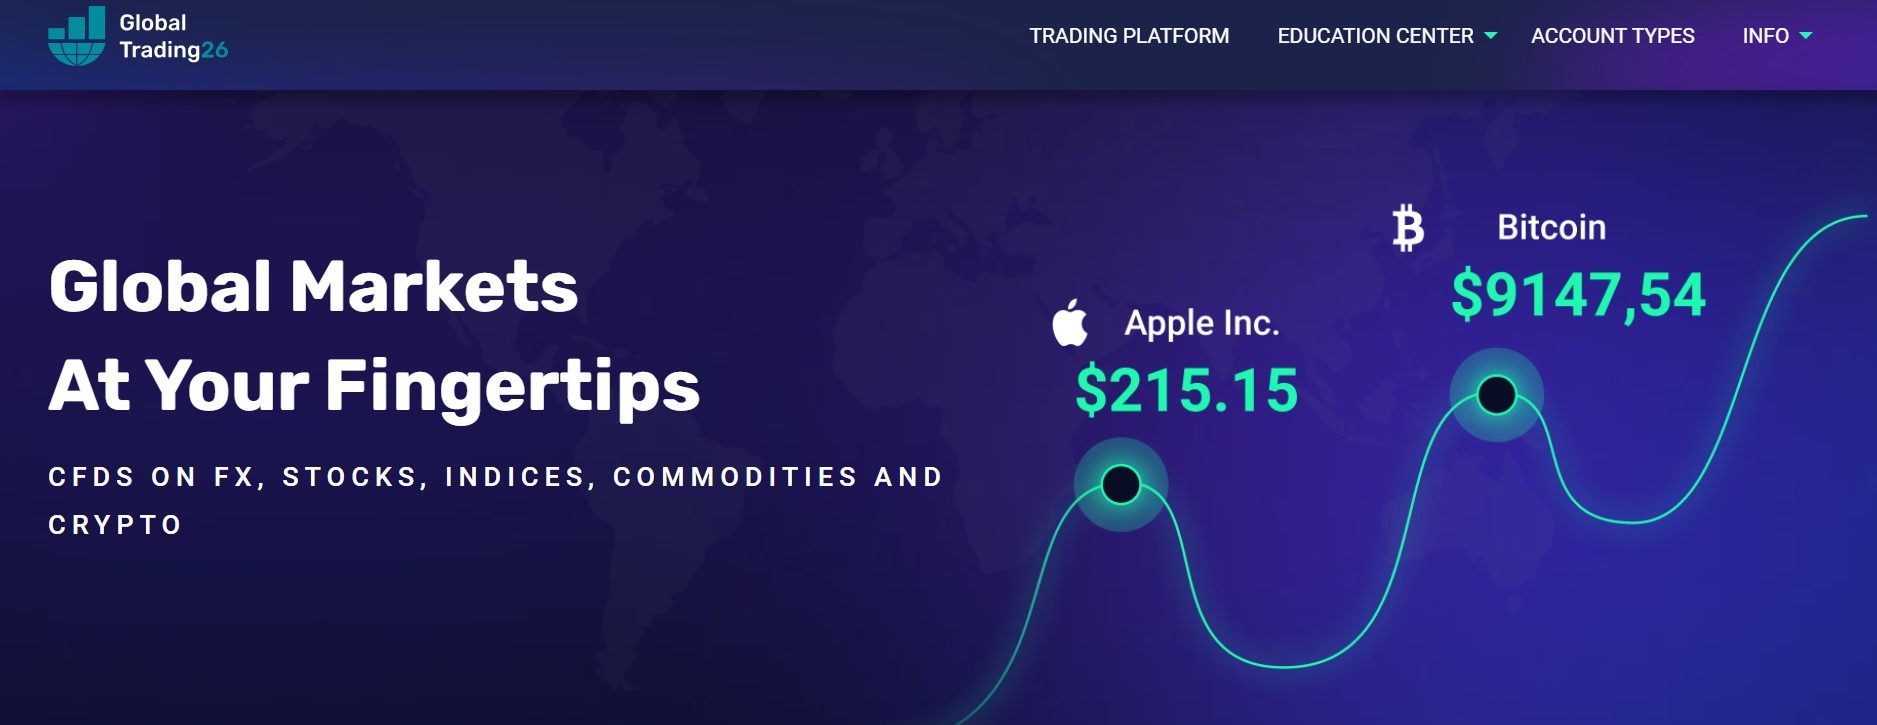 Global Trading26 website